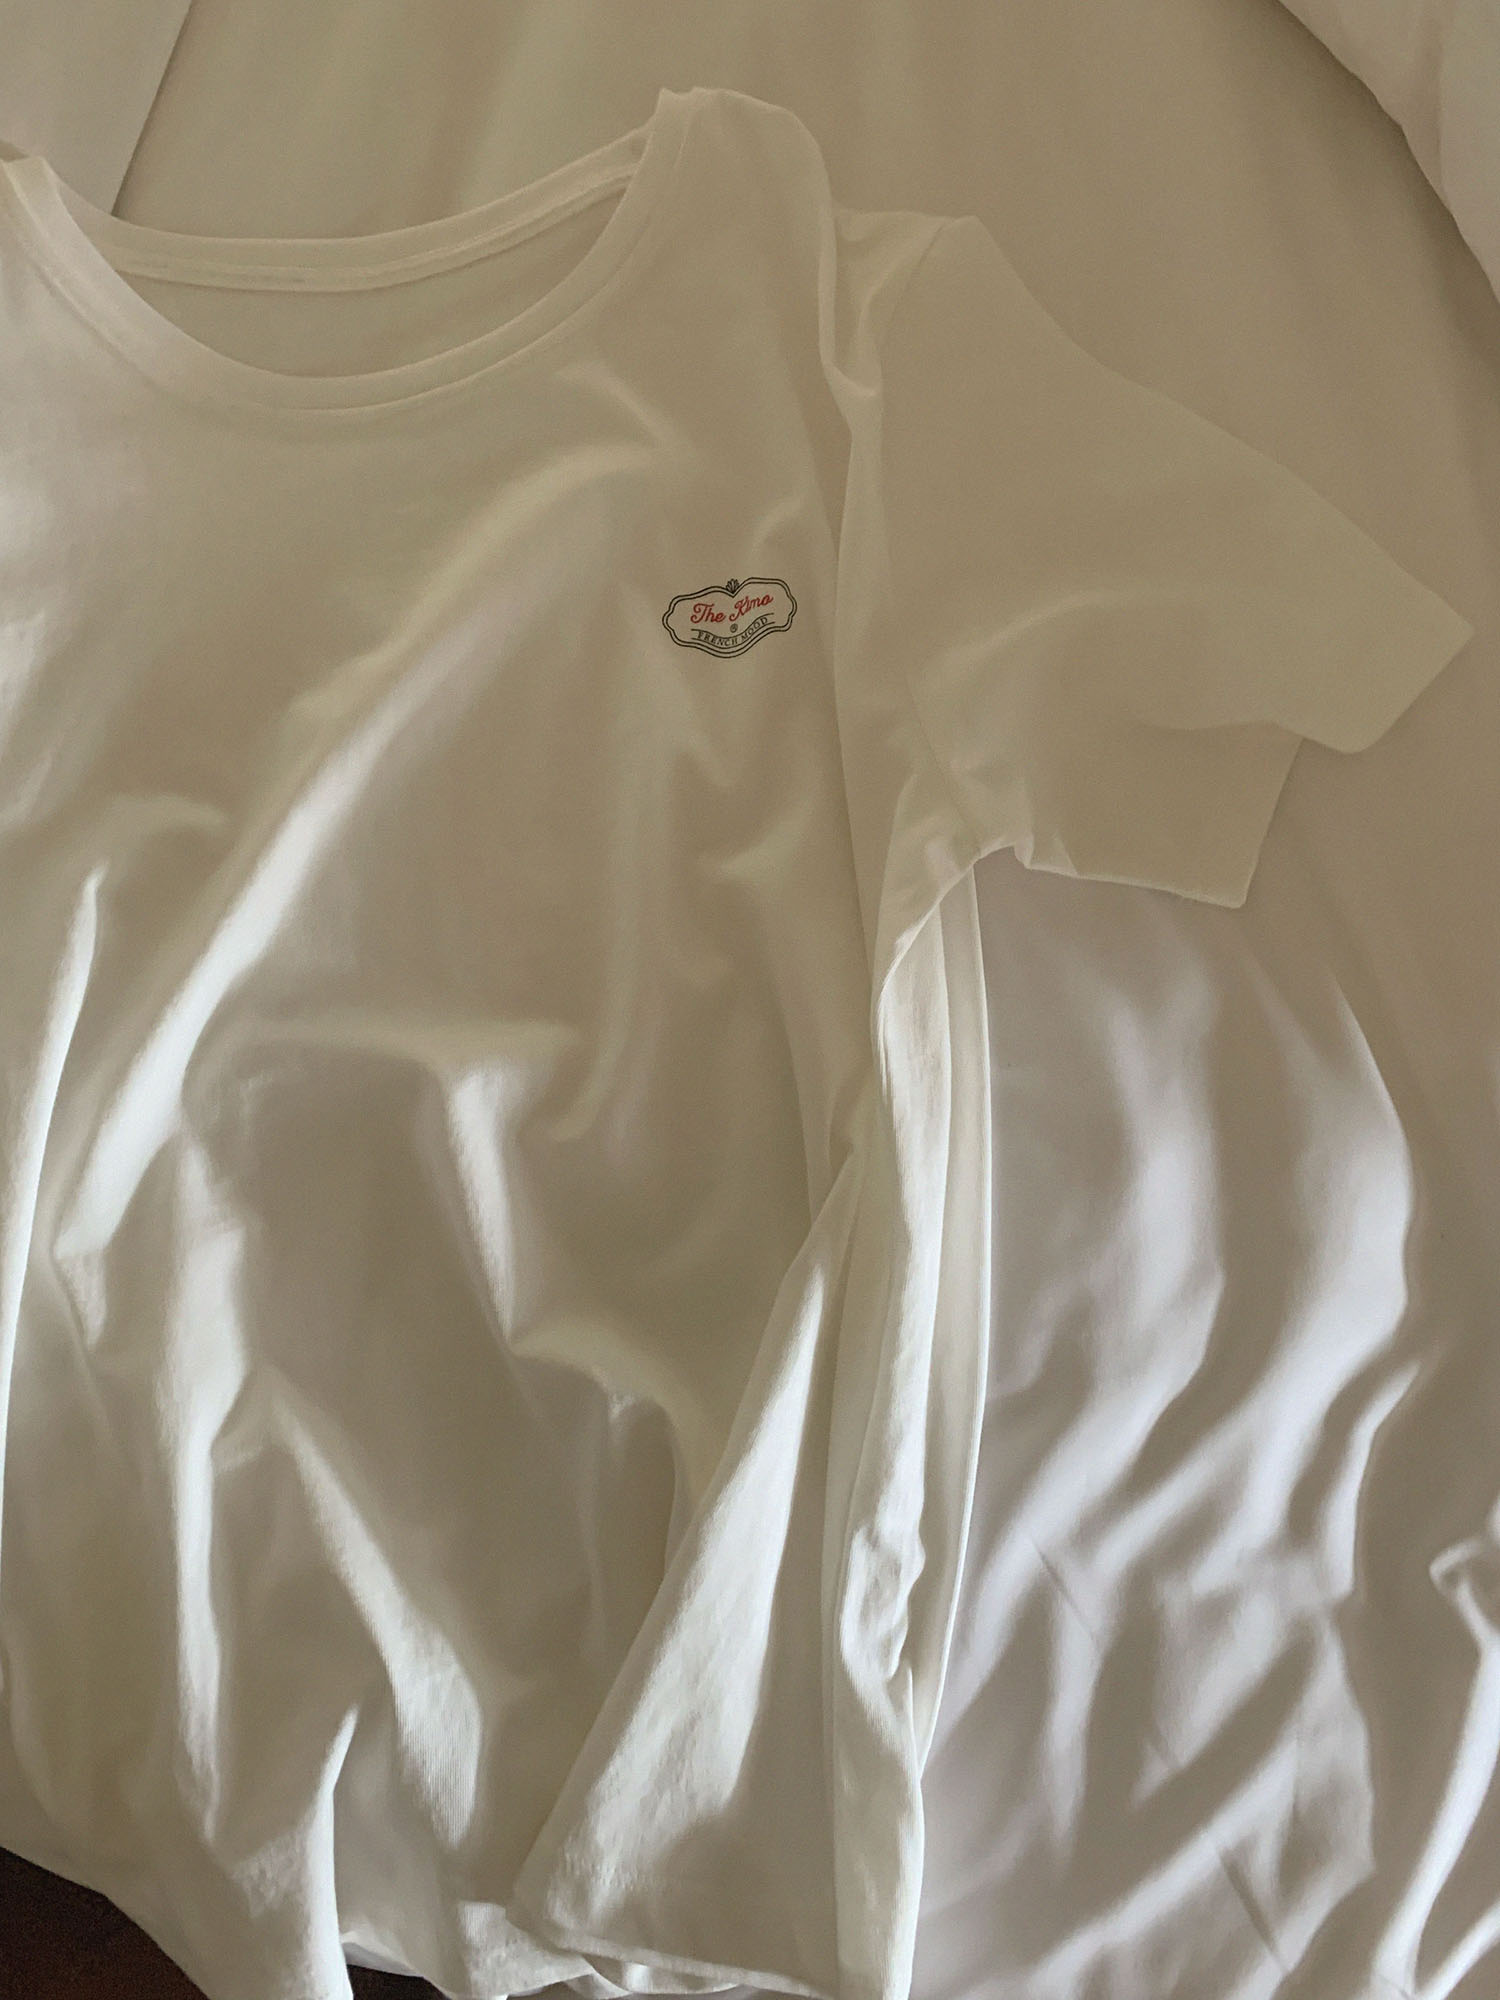 Kimo Summer Plain T-Shirts (2차 리오더 진행 중)